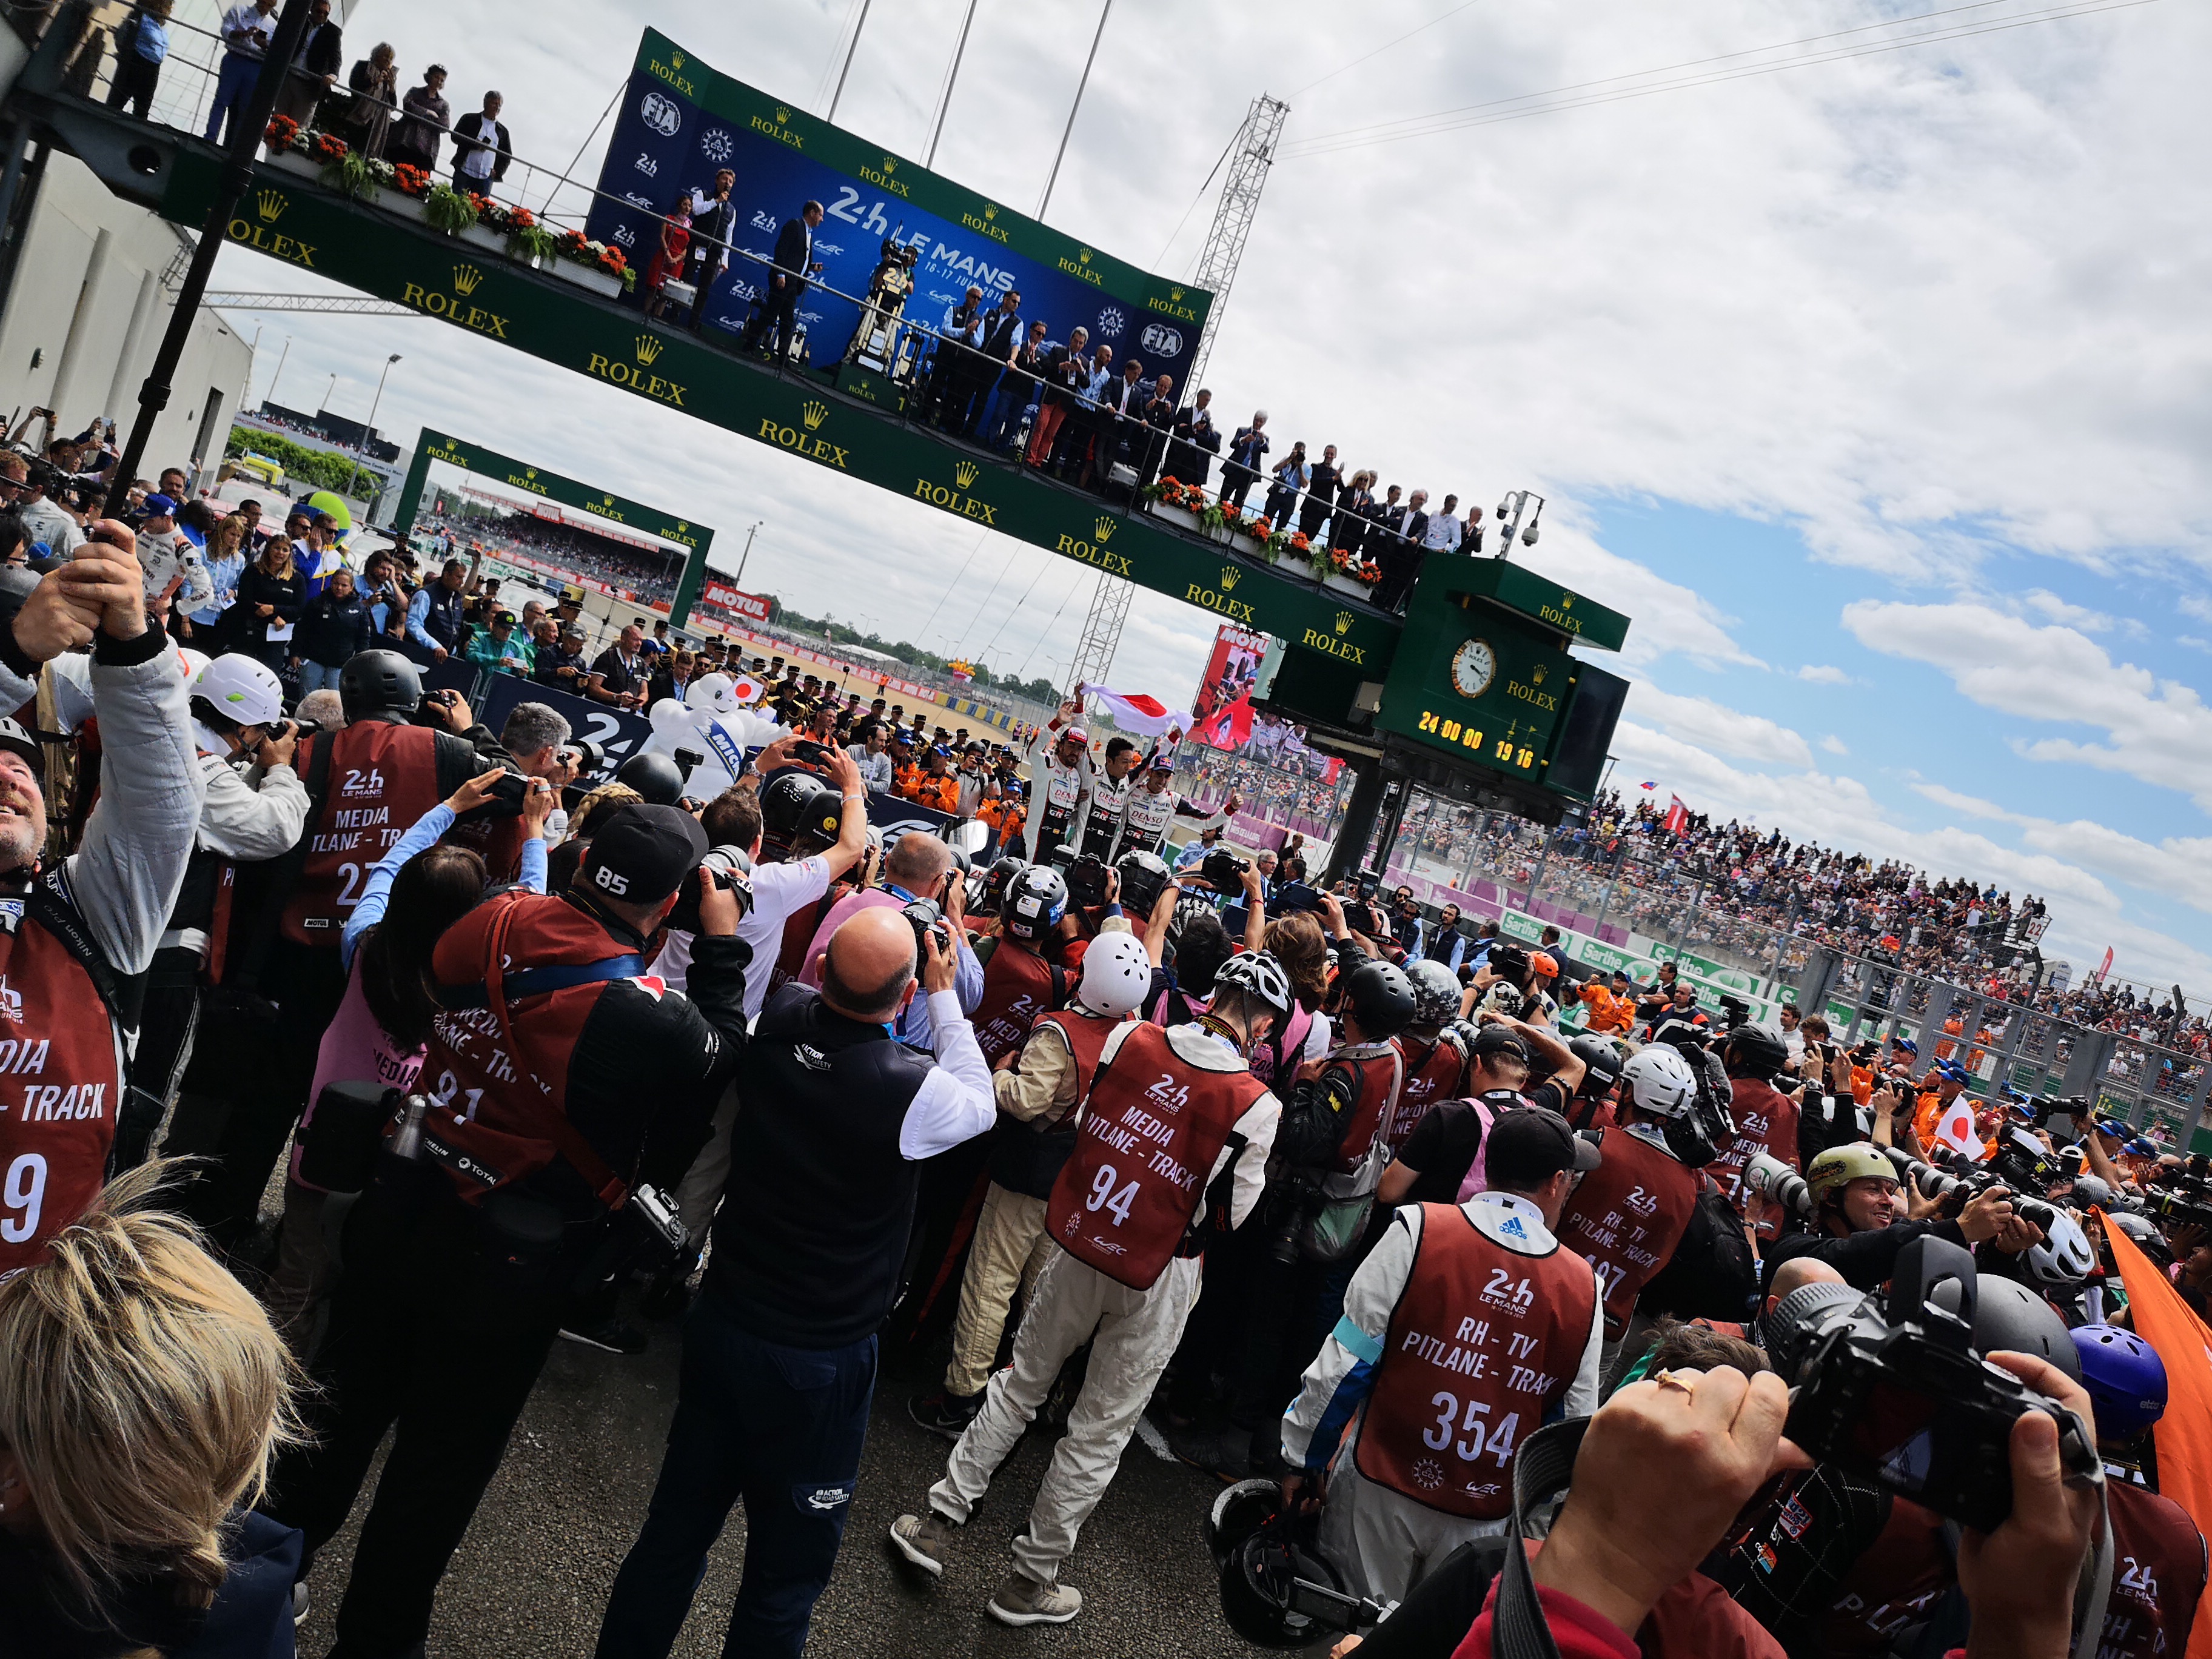 2018 Le Mans 24 Hours - post-race atmosphere in pitlane and podium - Fernando Alonso, Kajuki Nakajima, Sebastien Buemi